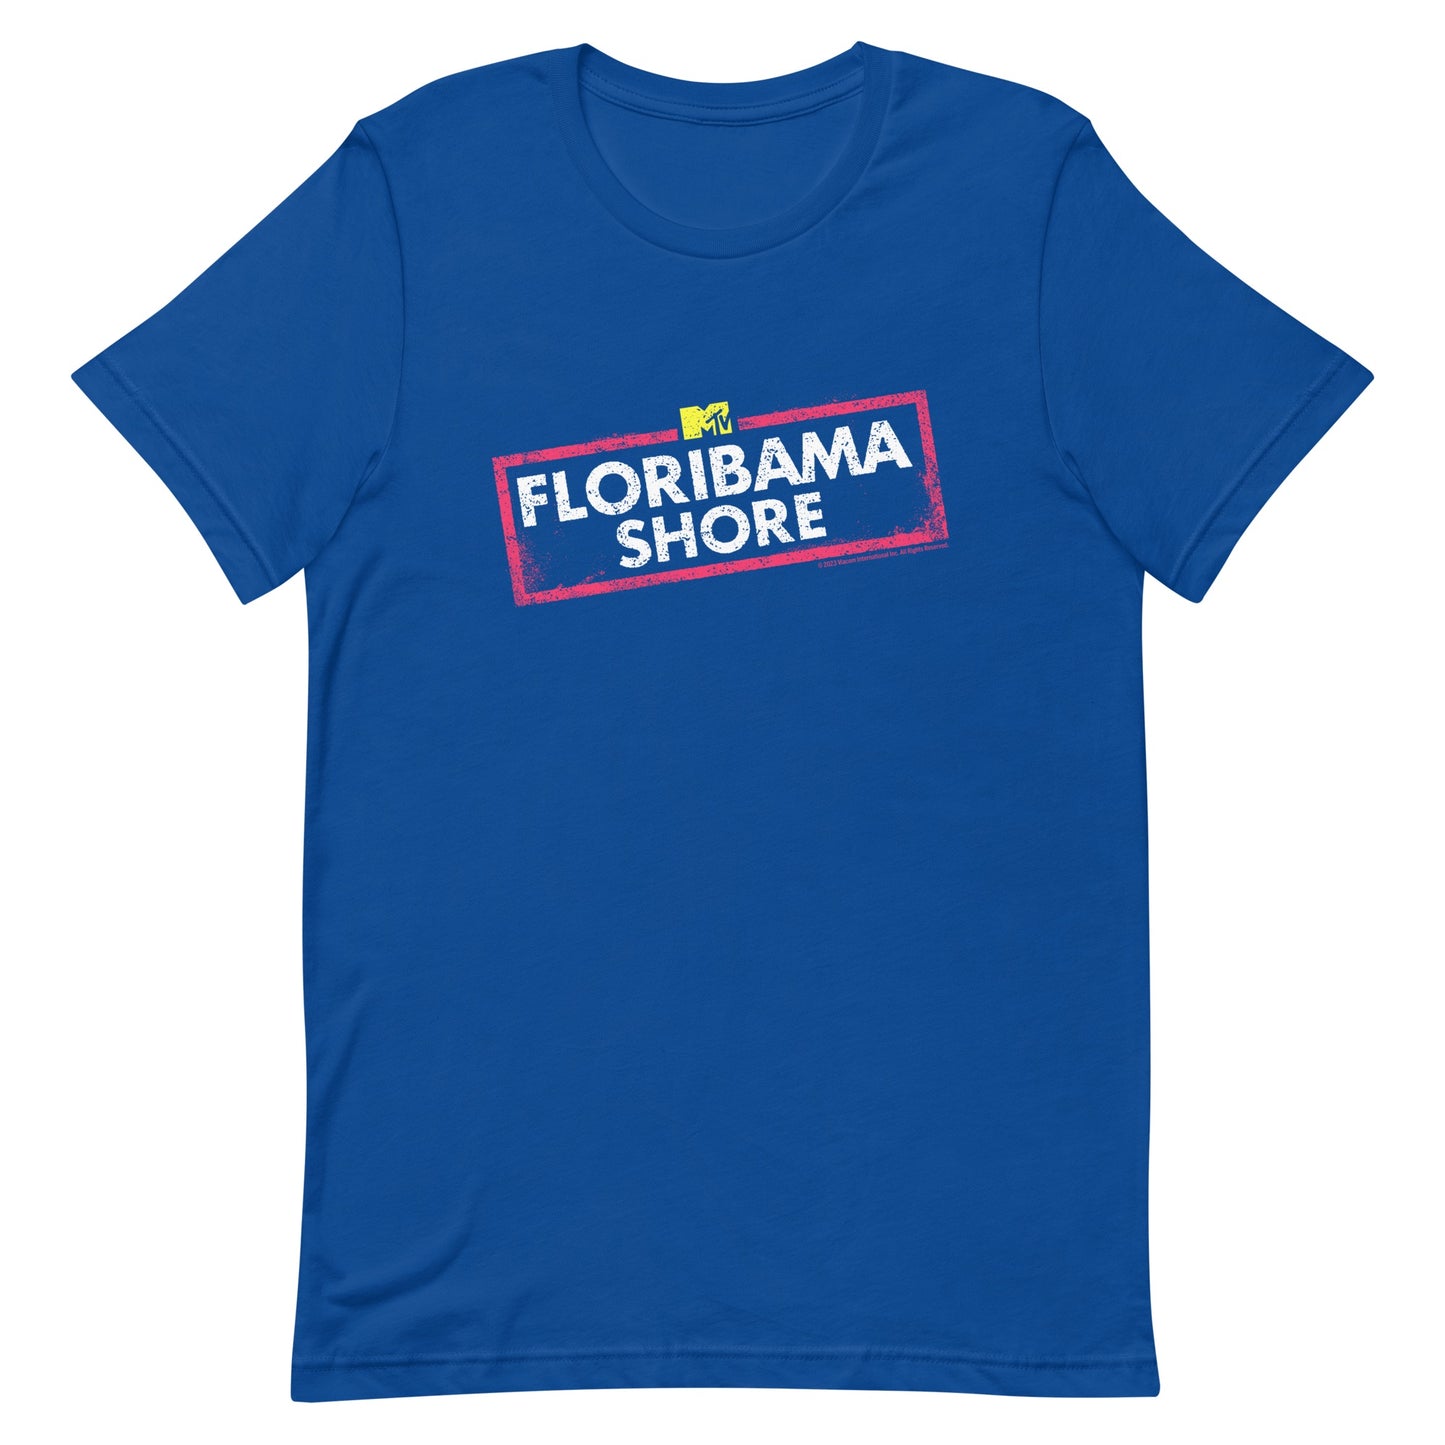 Floribama Shore Adultos Camiseta de manga corta